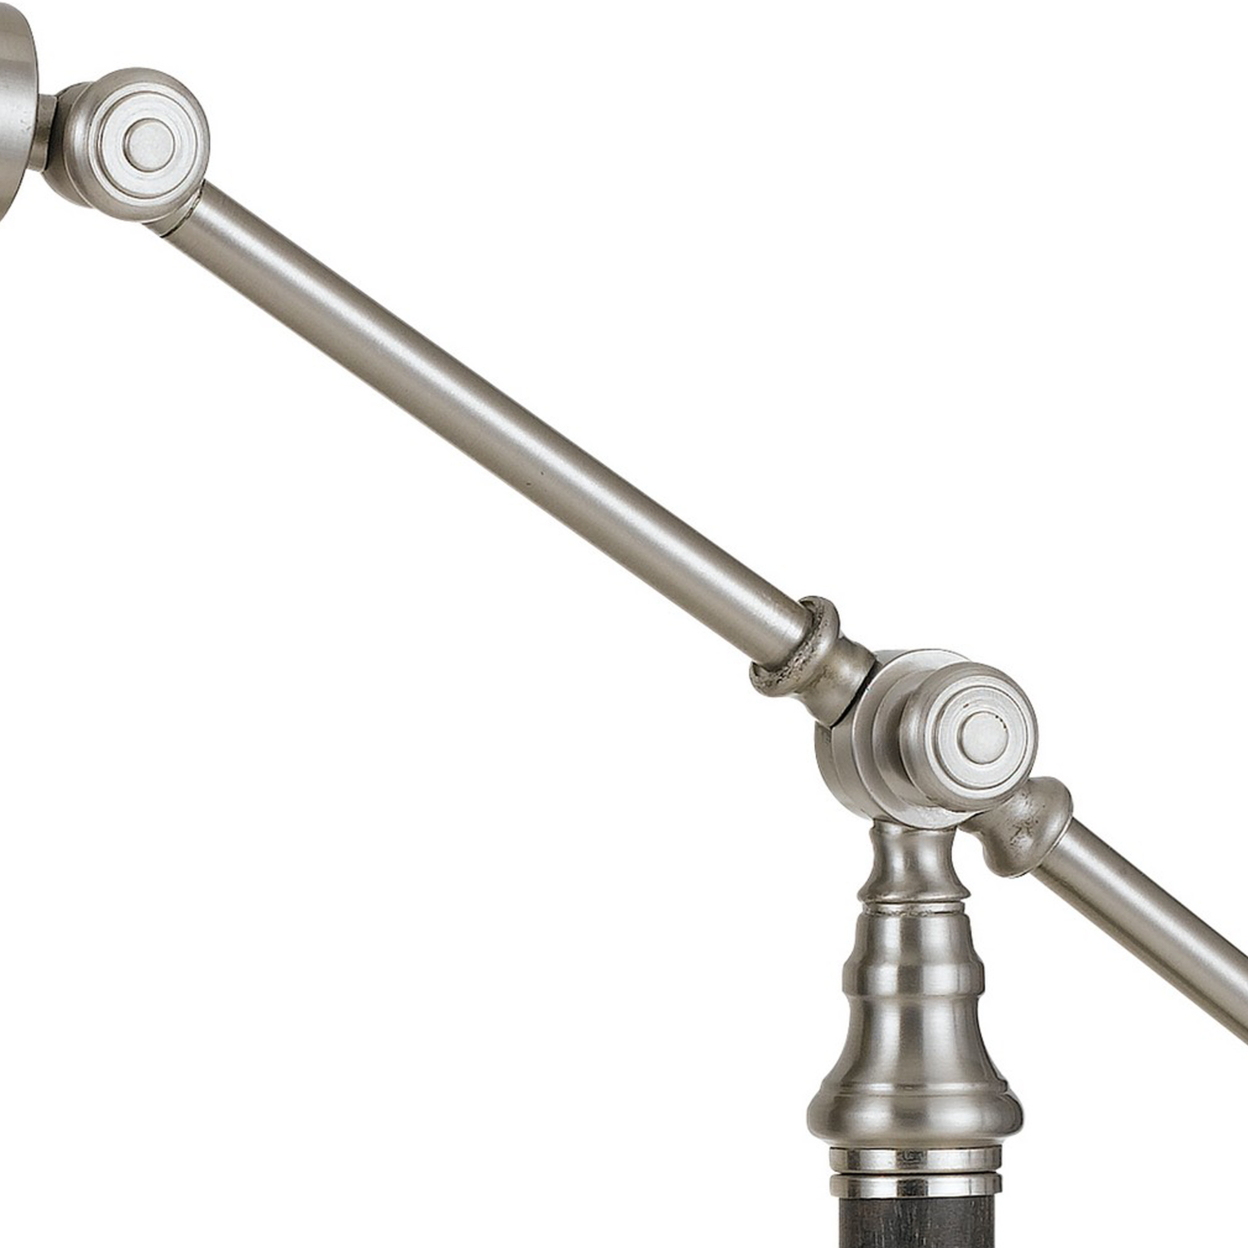 60 Watt Metal Desk Lamp With Adjustable Arm And Head, Silver- Saltoro Sherpi